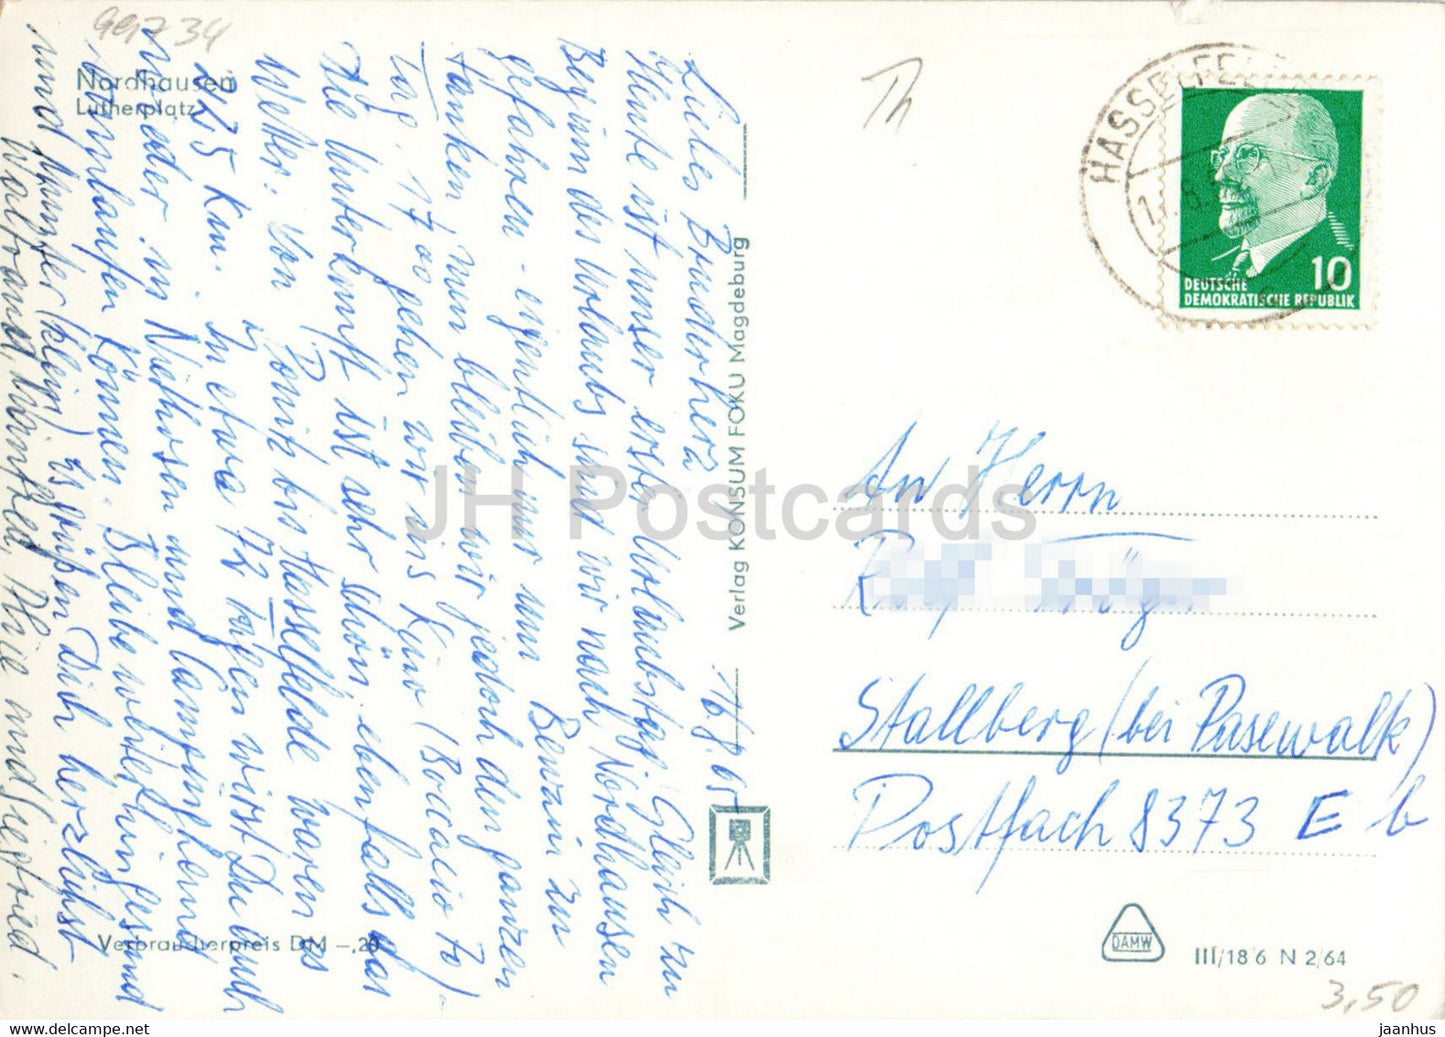 Nordhausen - Lutherplatz - Kreissparkasse - old postcard - 1965 - Germany DDR - used